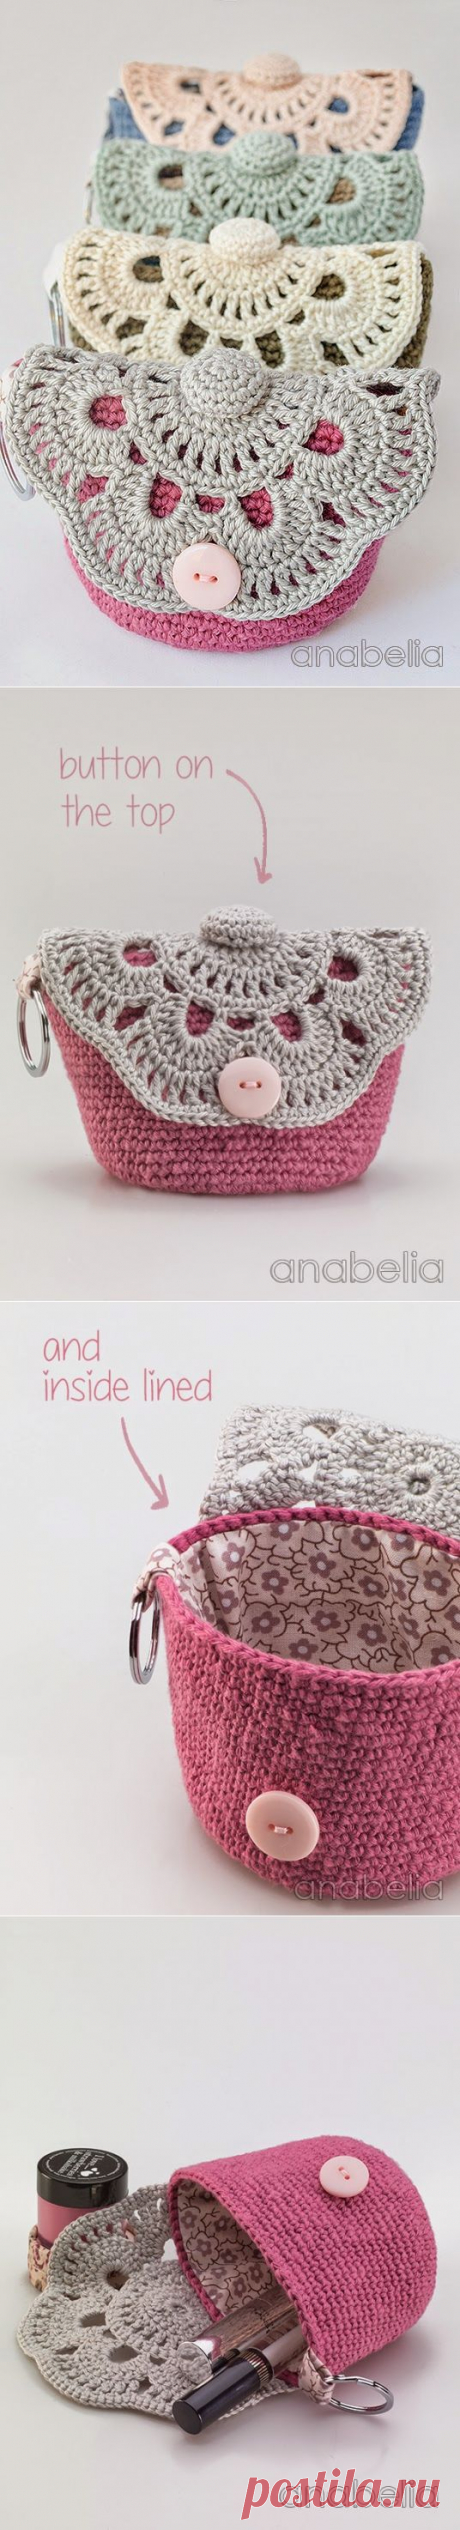 Anabelia craft design: DIY: MakeUp crochet pouches